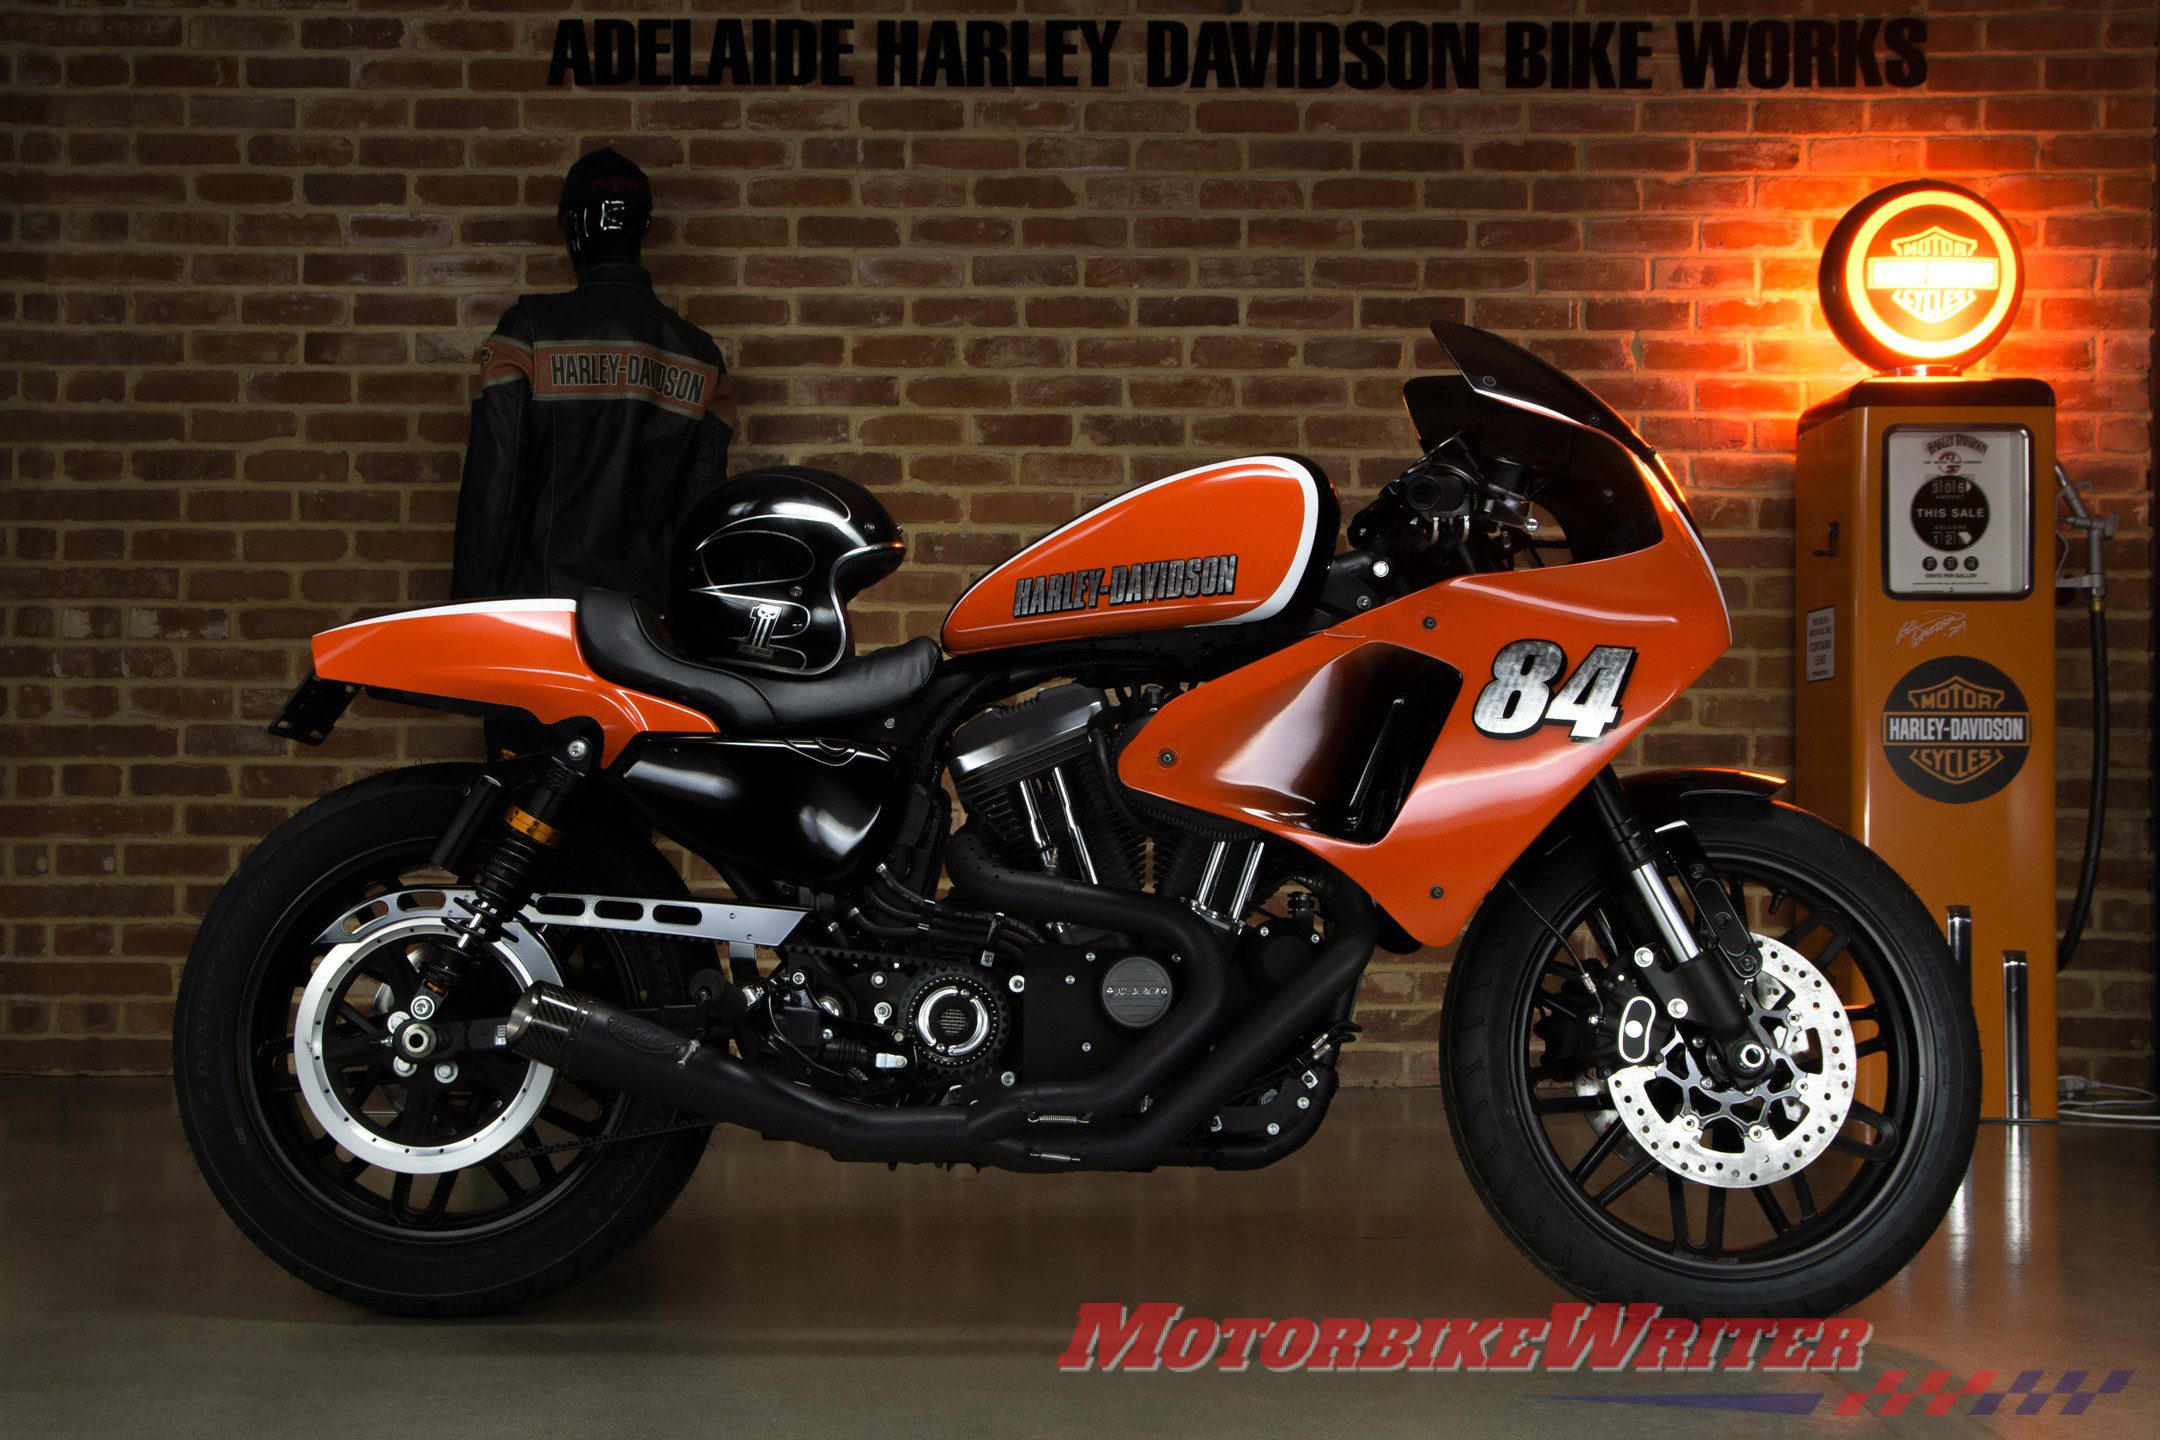 Adelaide Harley-Davidson Bike Works wins Battle of the Kings